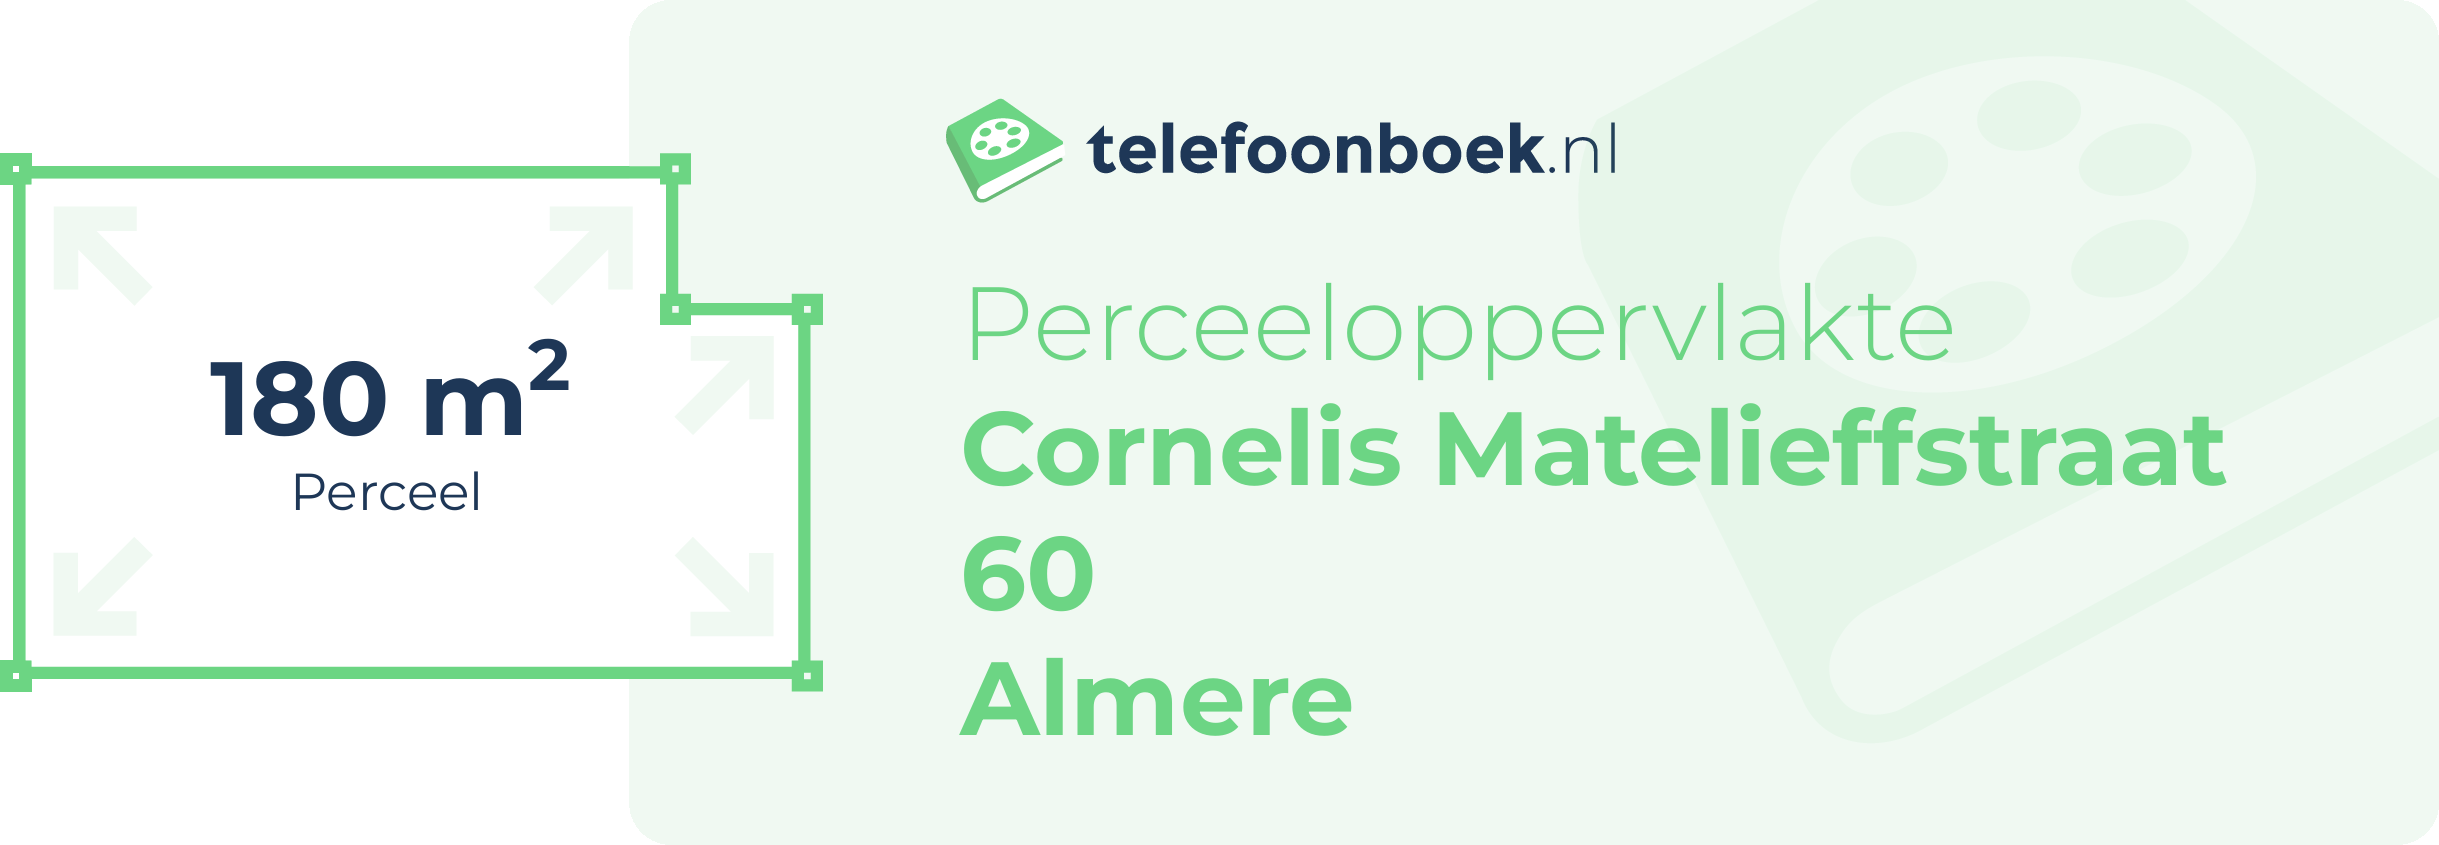 Perceeloppervlakte Cornelis Matelieffstraat 60 Almere